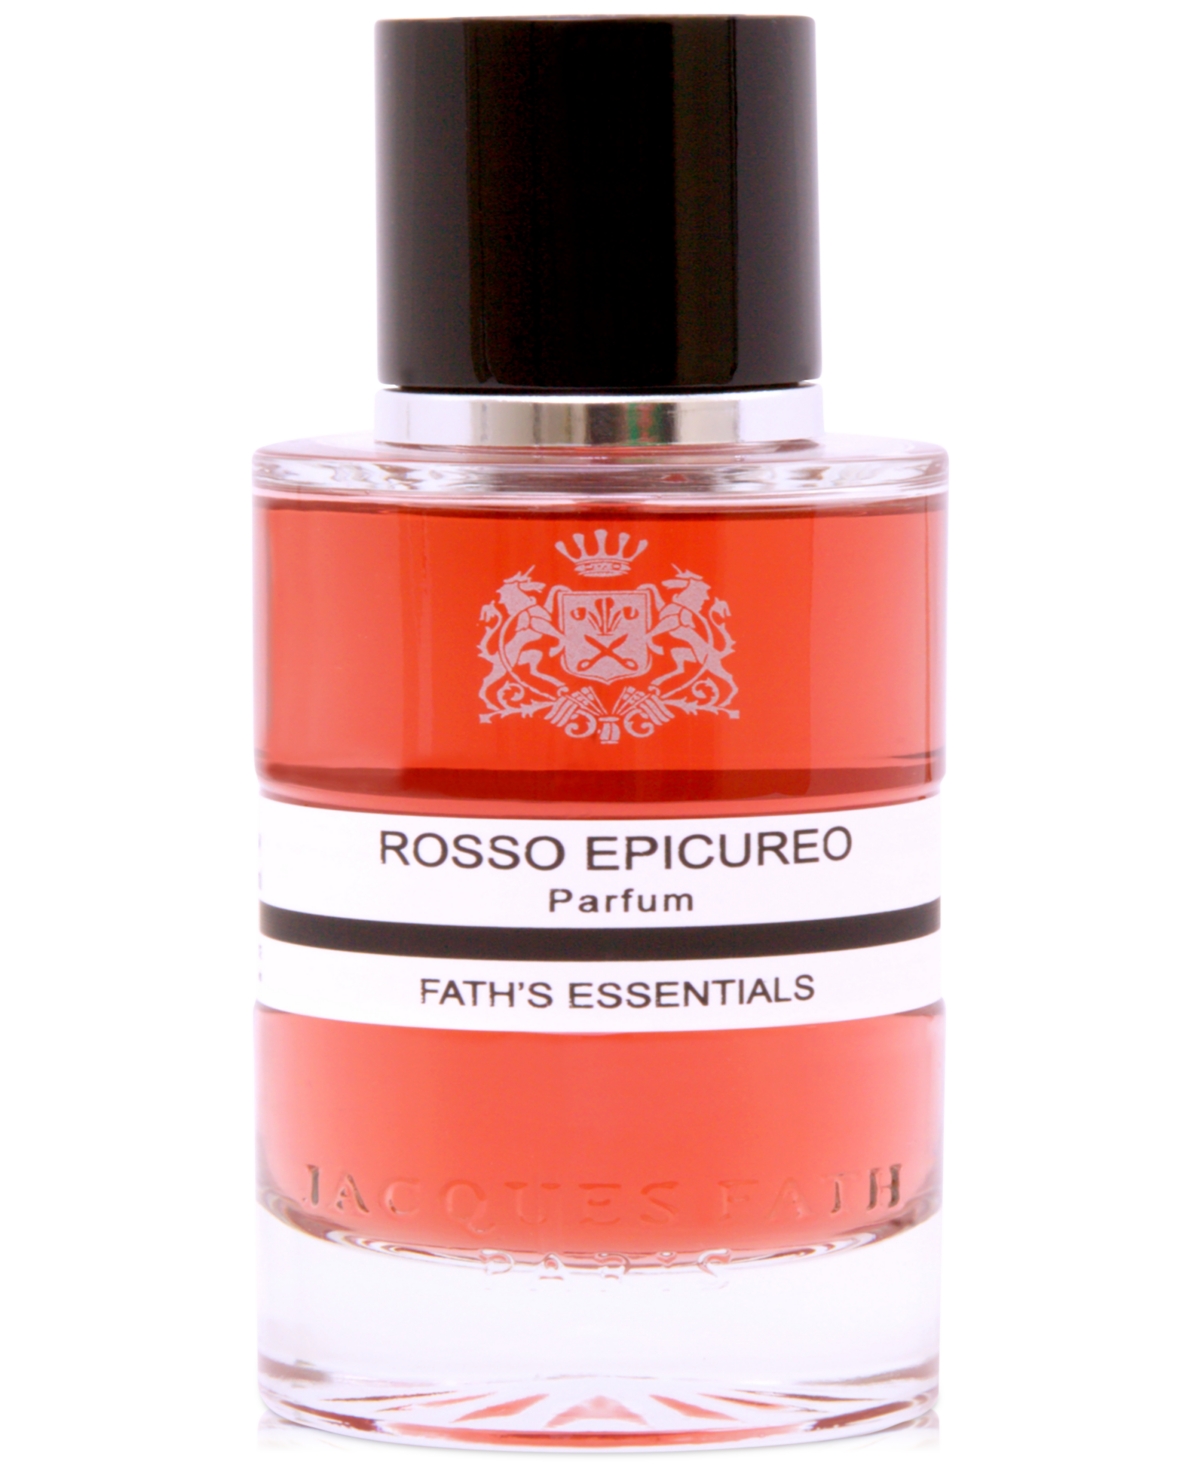 Rosso Epicureo Parfum, 3.4 oz.